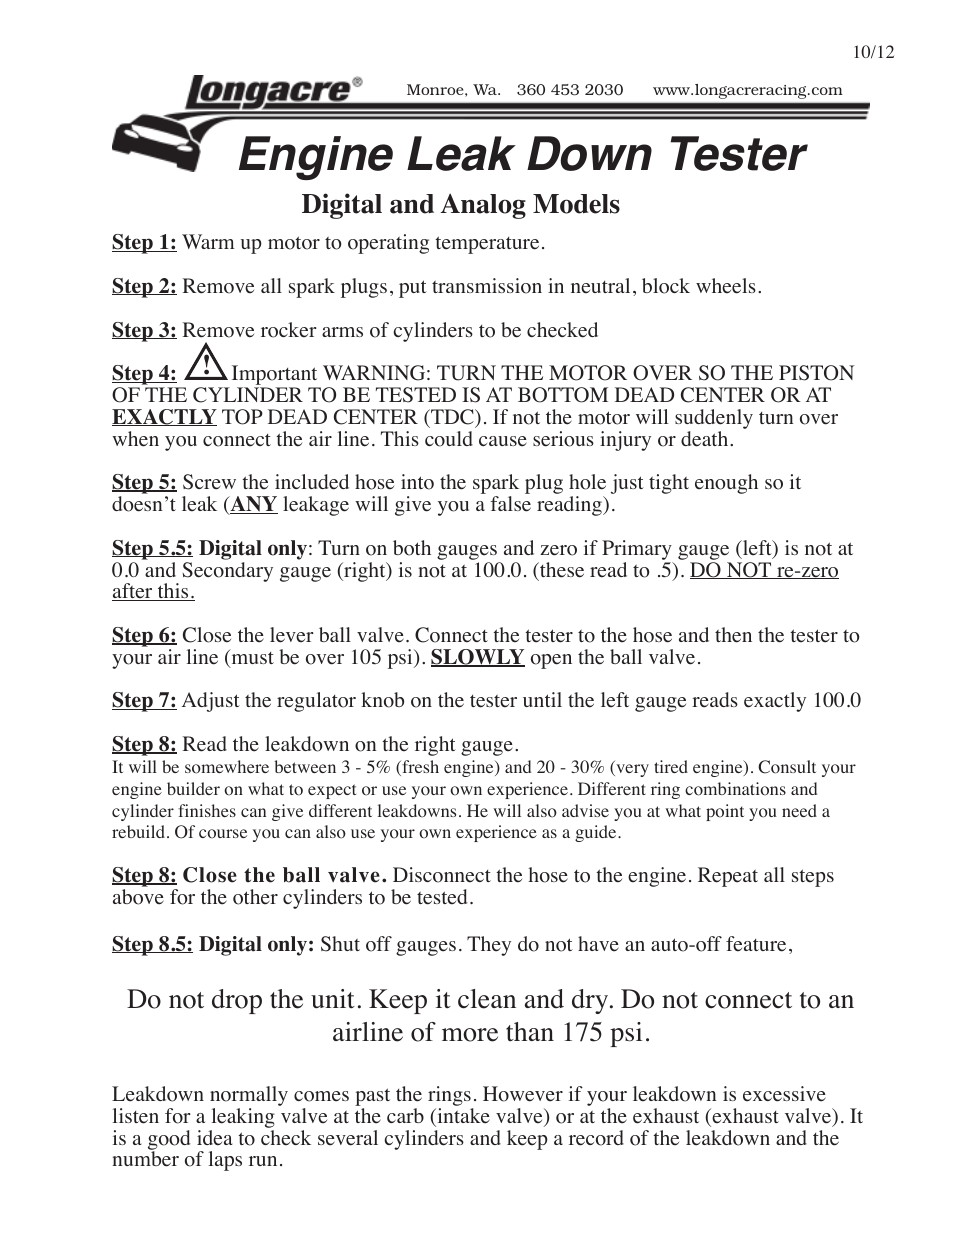 73014 Engine Leak Down Tester